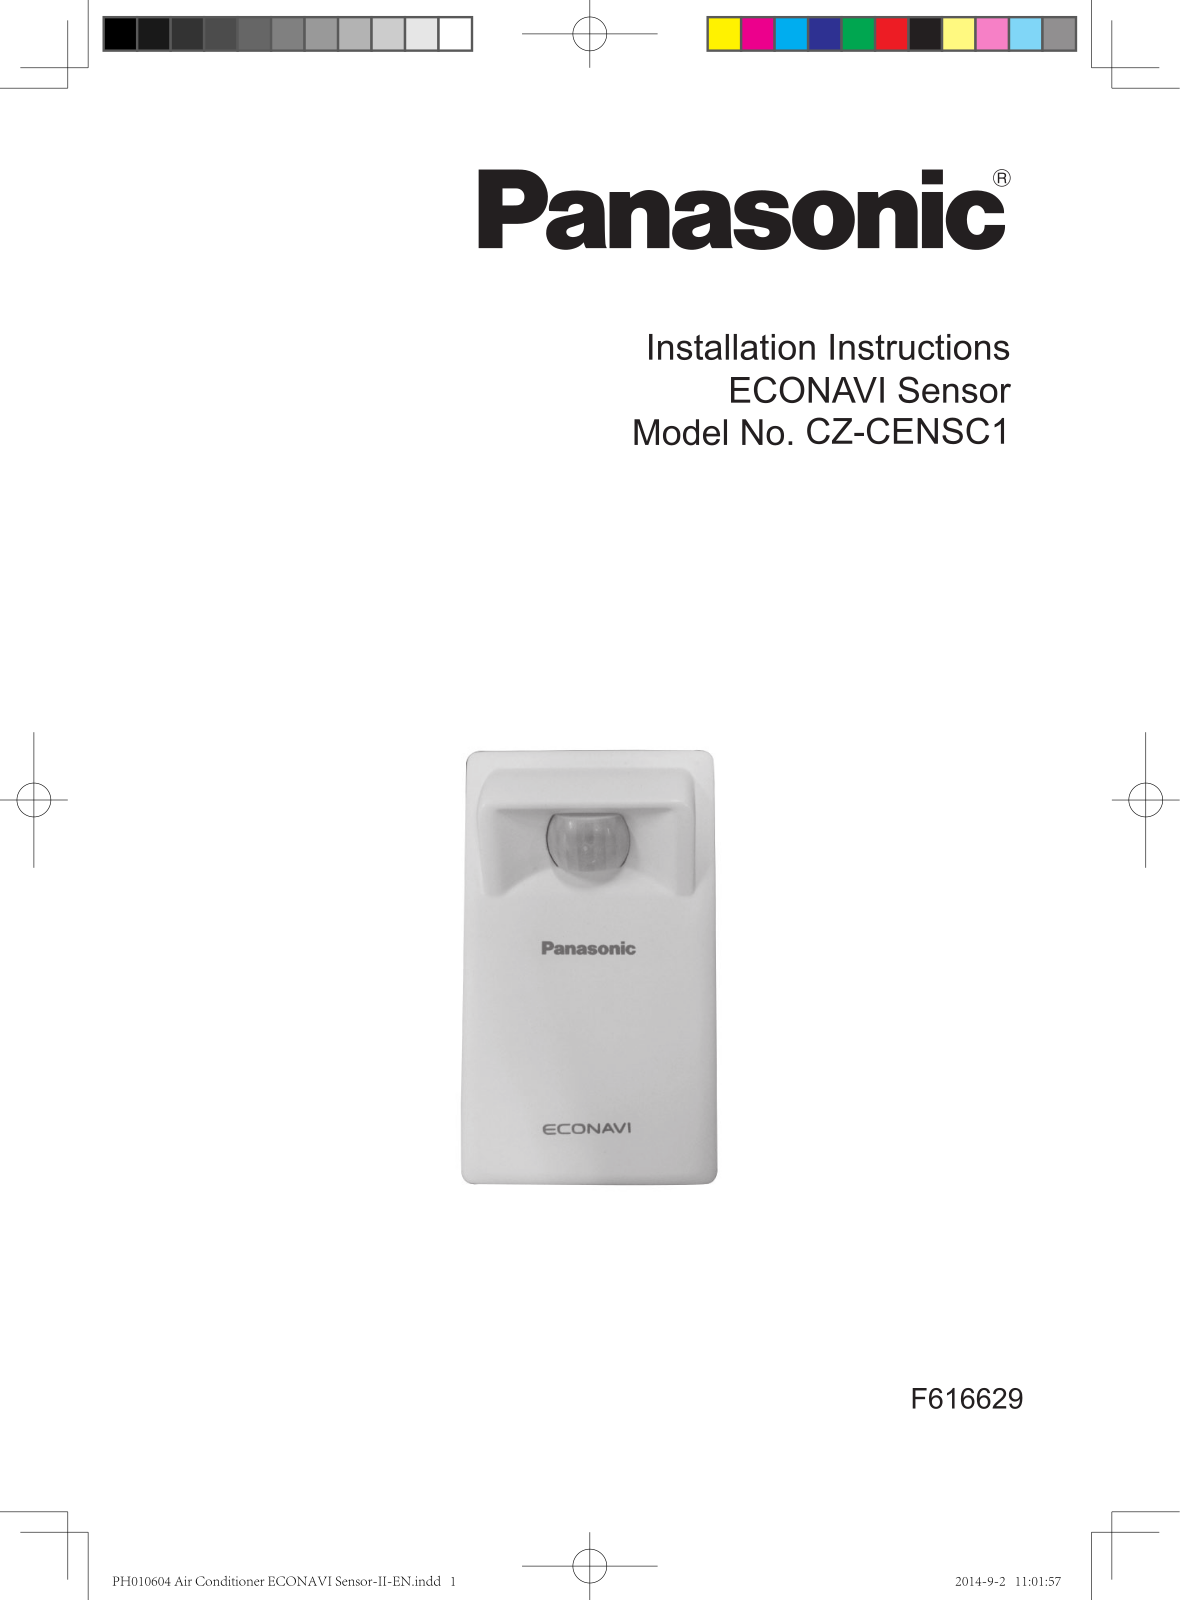 Panasonic CZ-CENSC1 installation